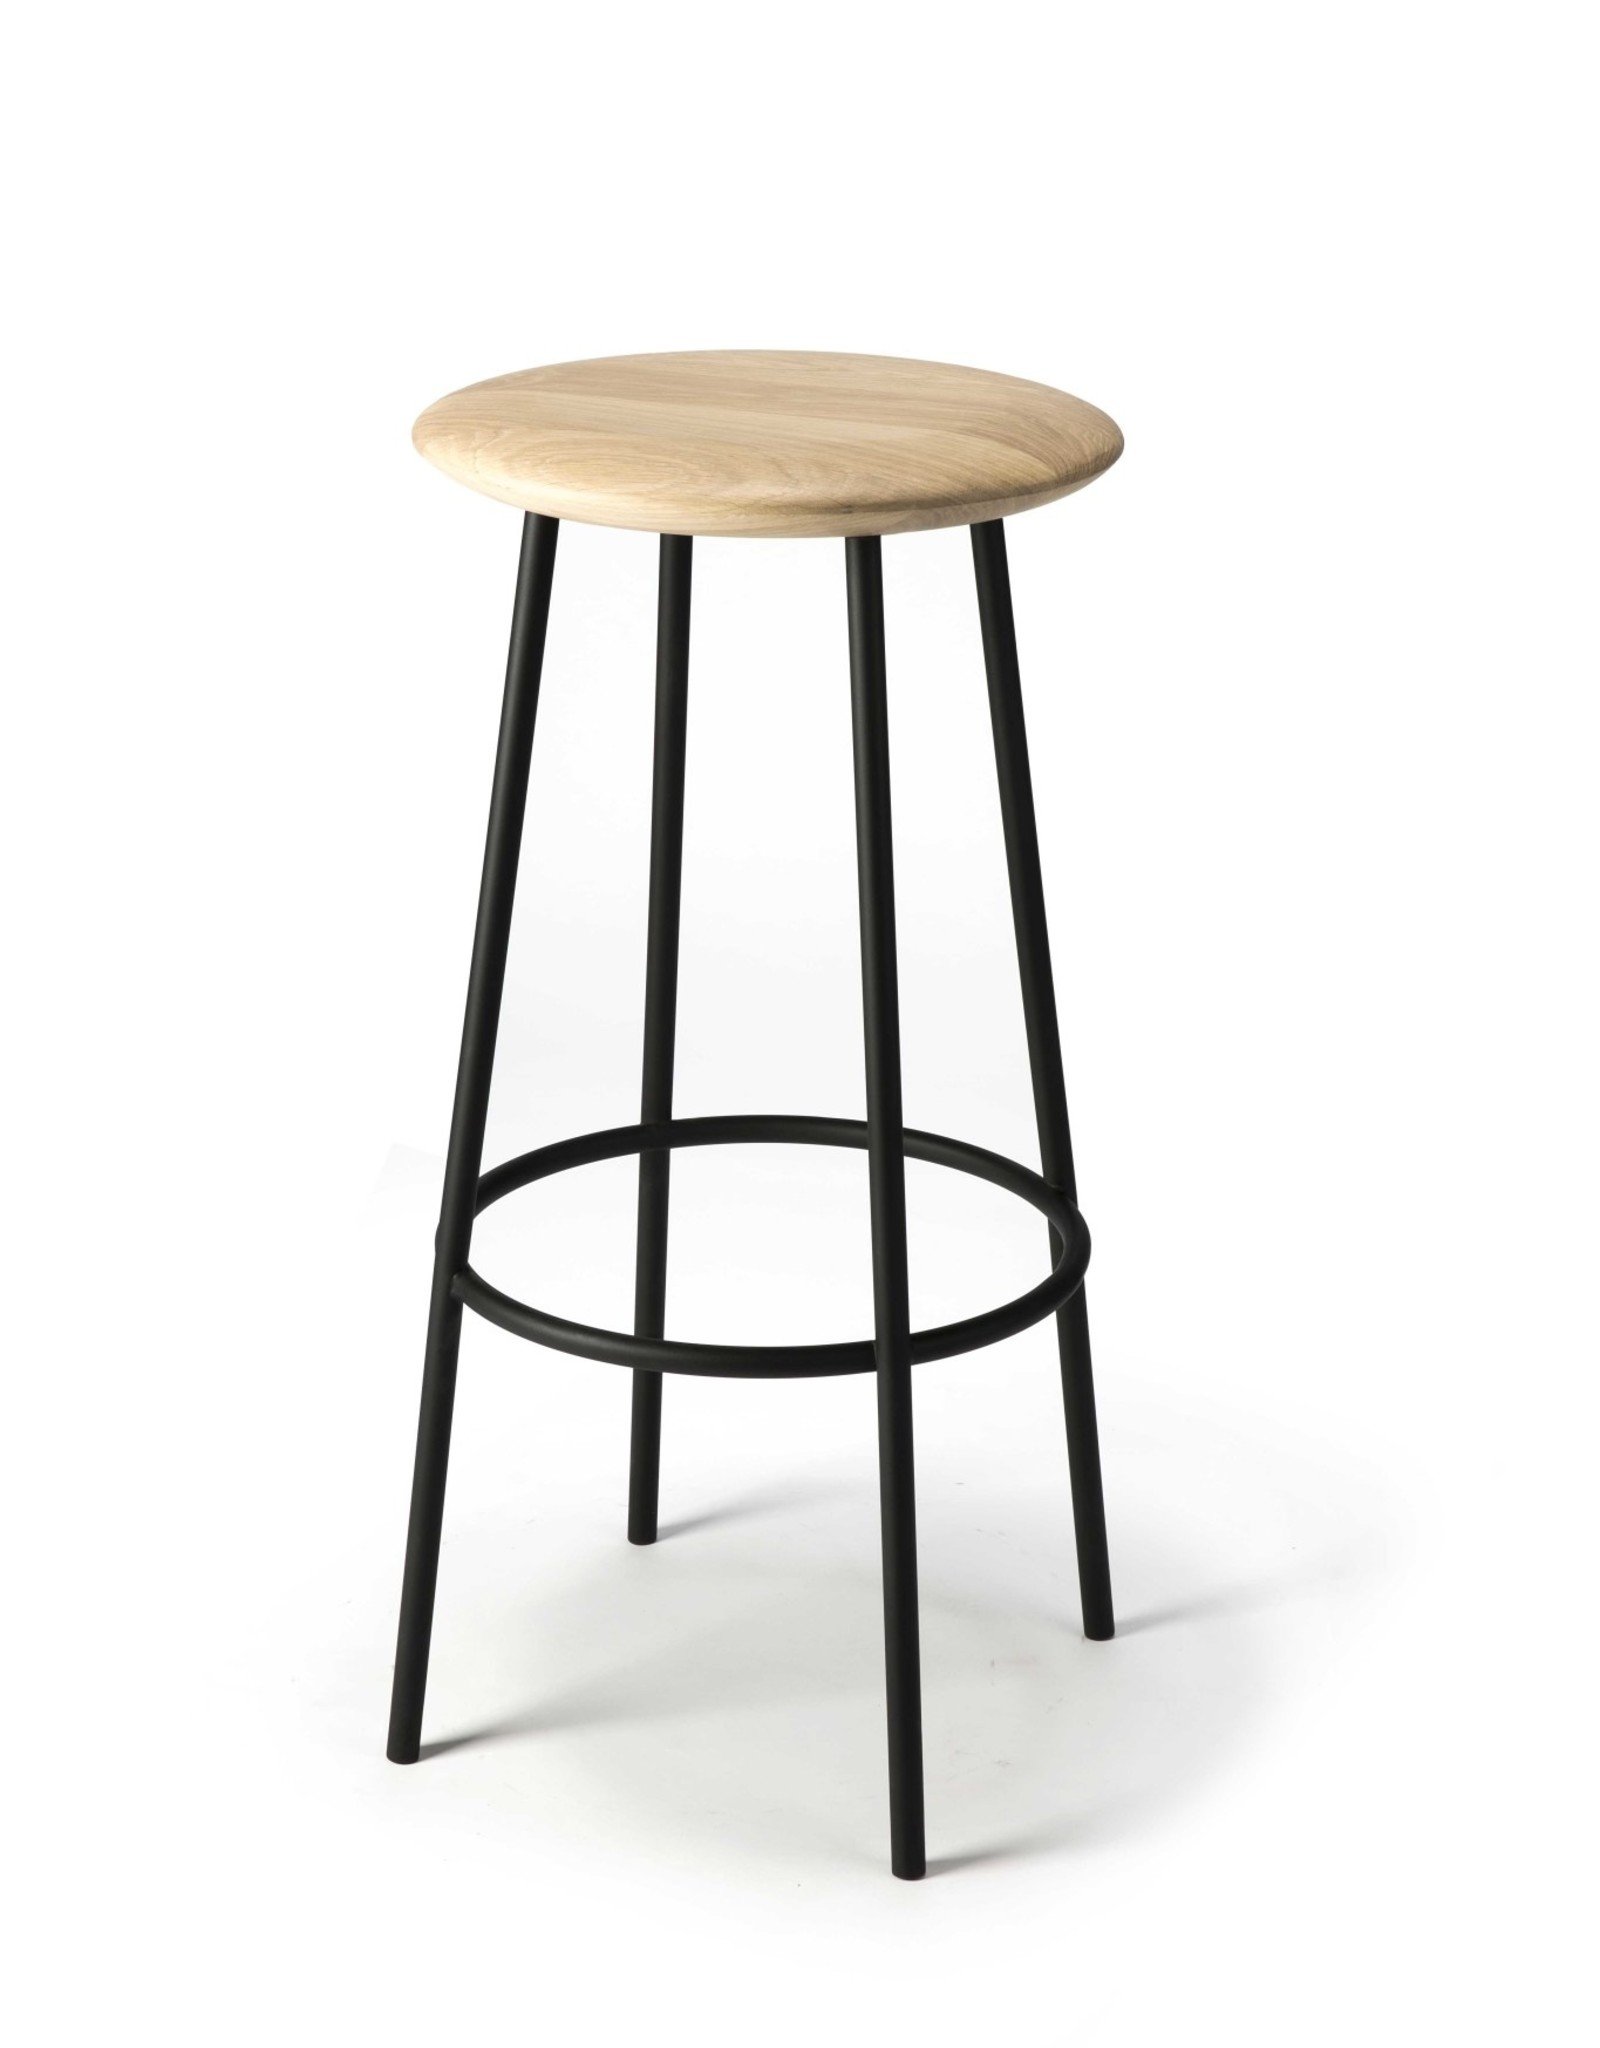 Oak Baretto bar stool - Varnished